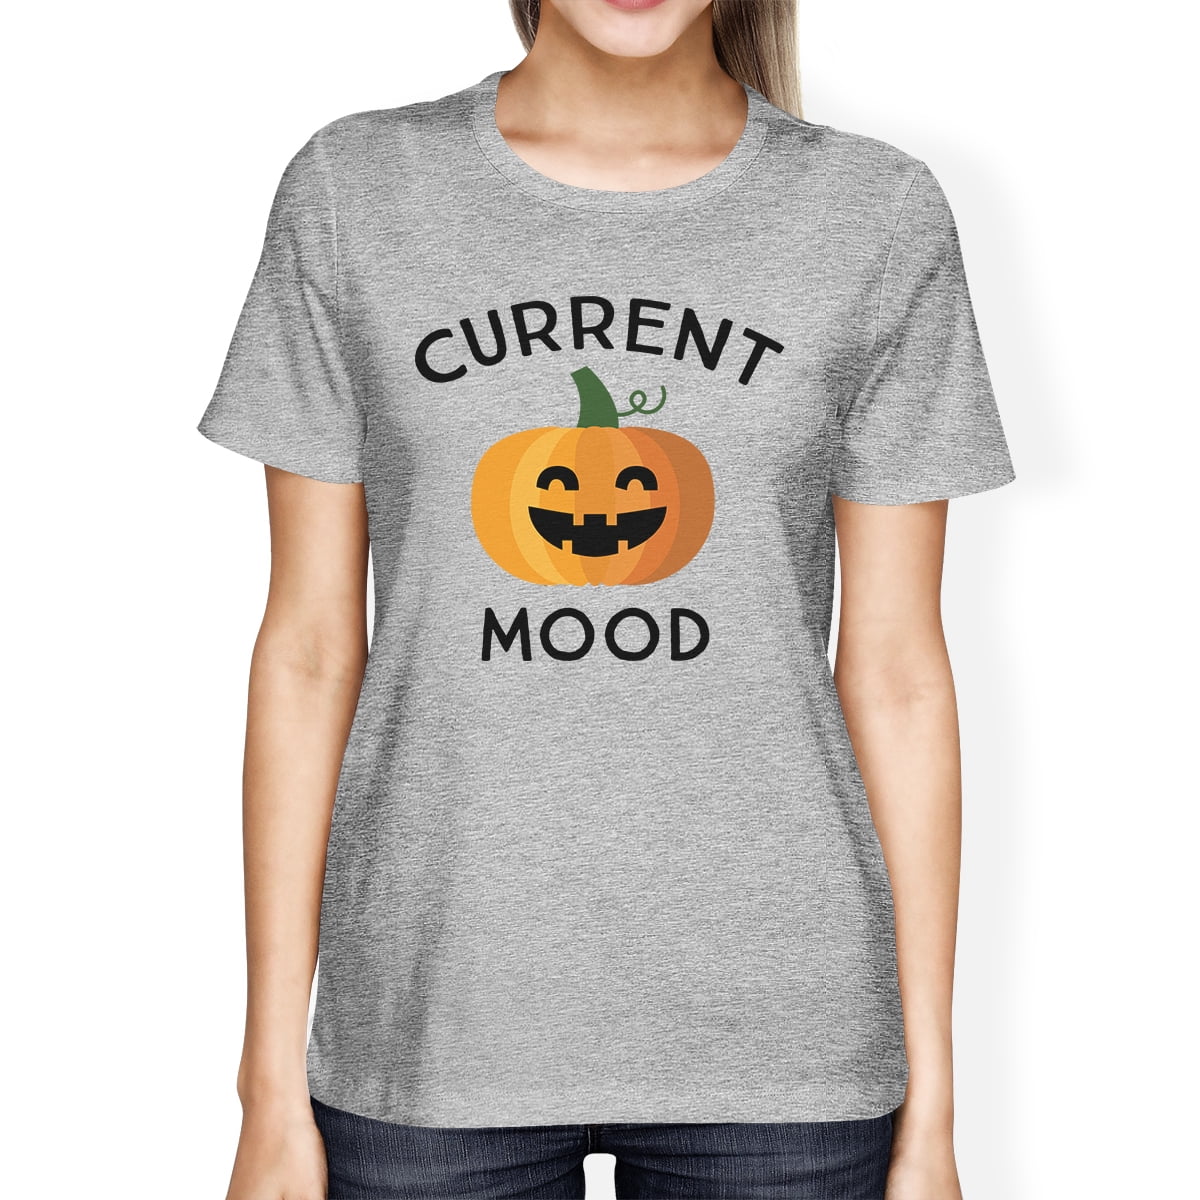 Details about   Pumpkin Current Mood Mens White Shirt